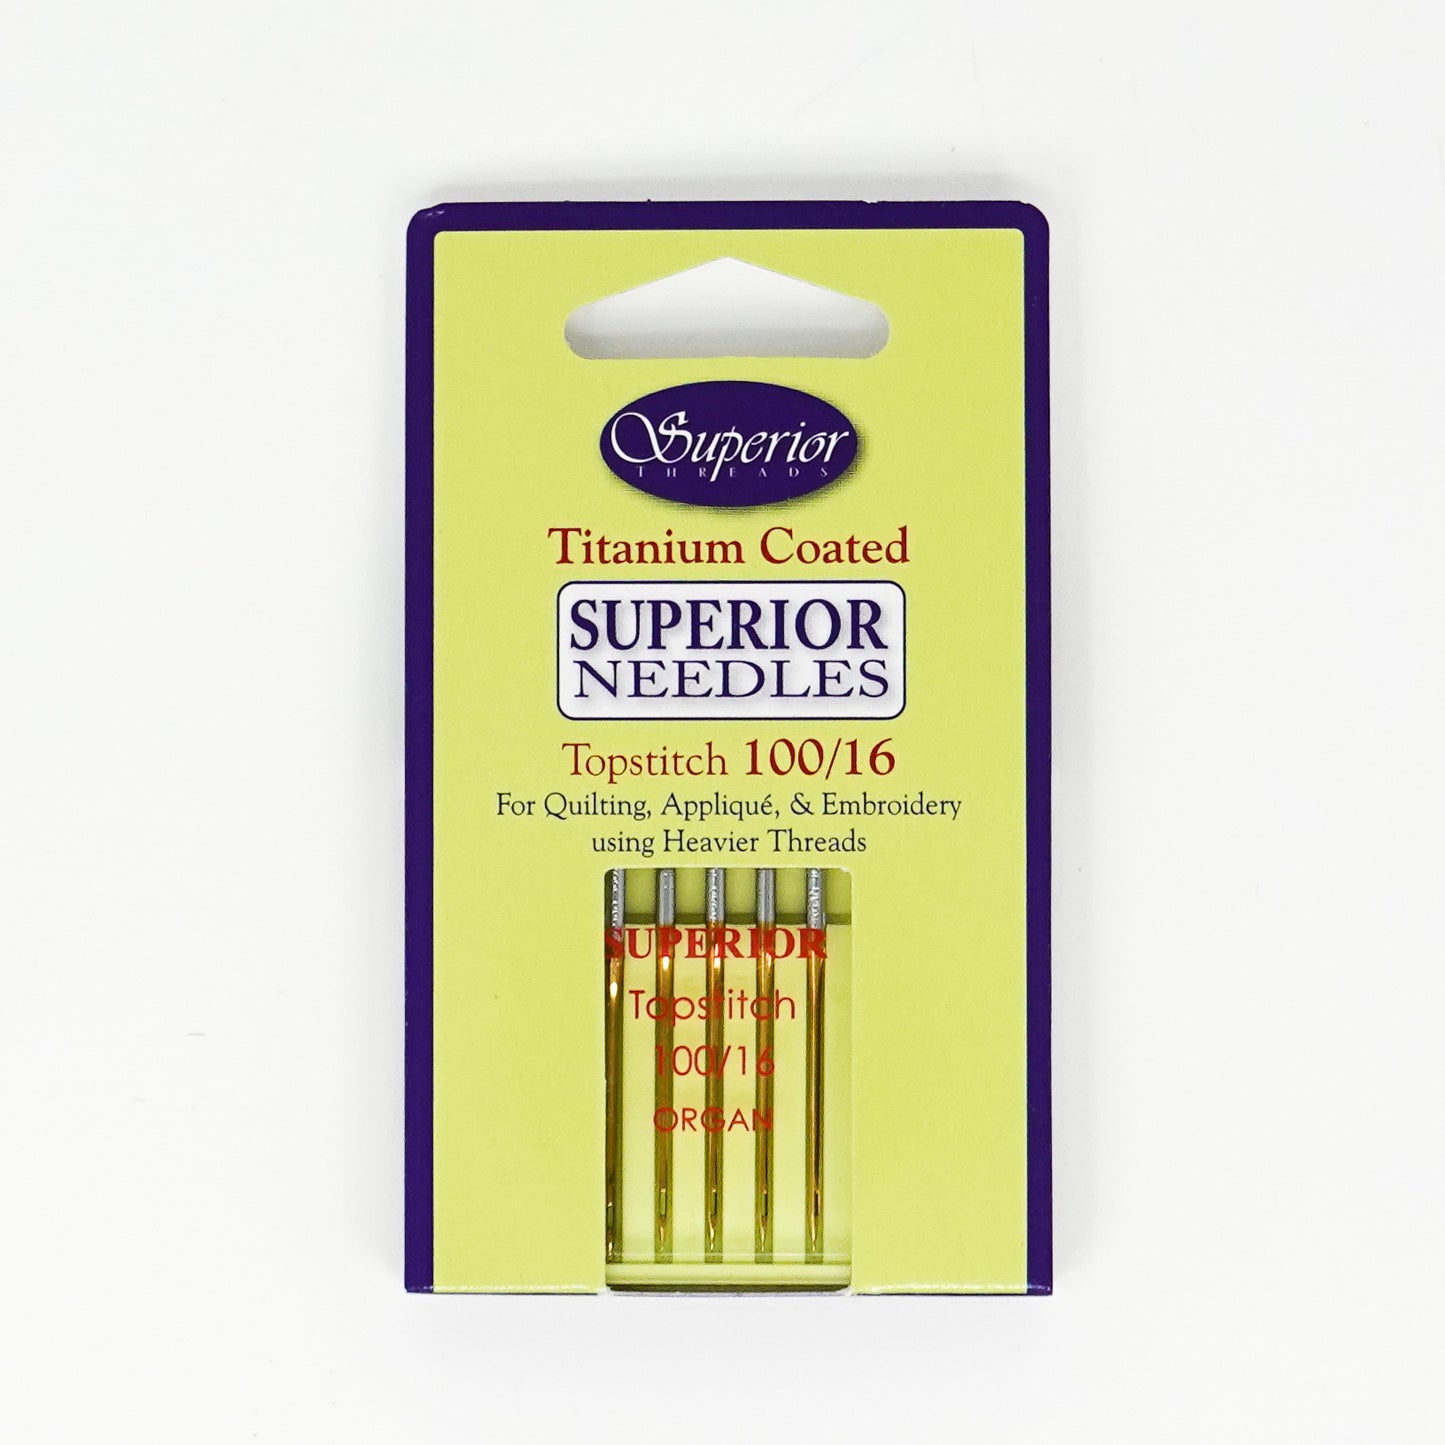 Superior Sewing Machine Needles - Topstitch - 16/100 - set of 5